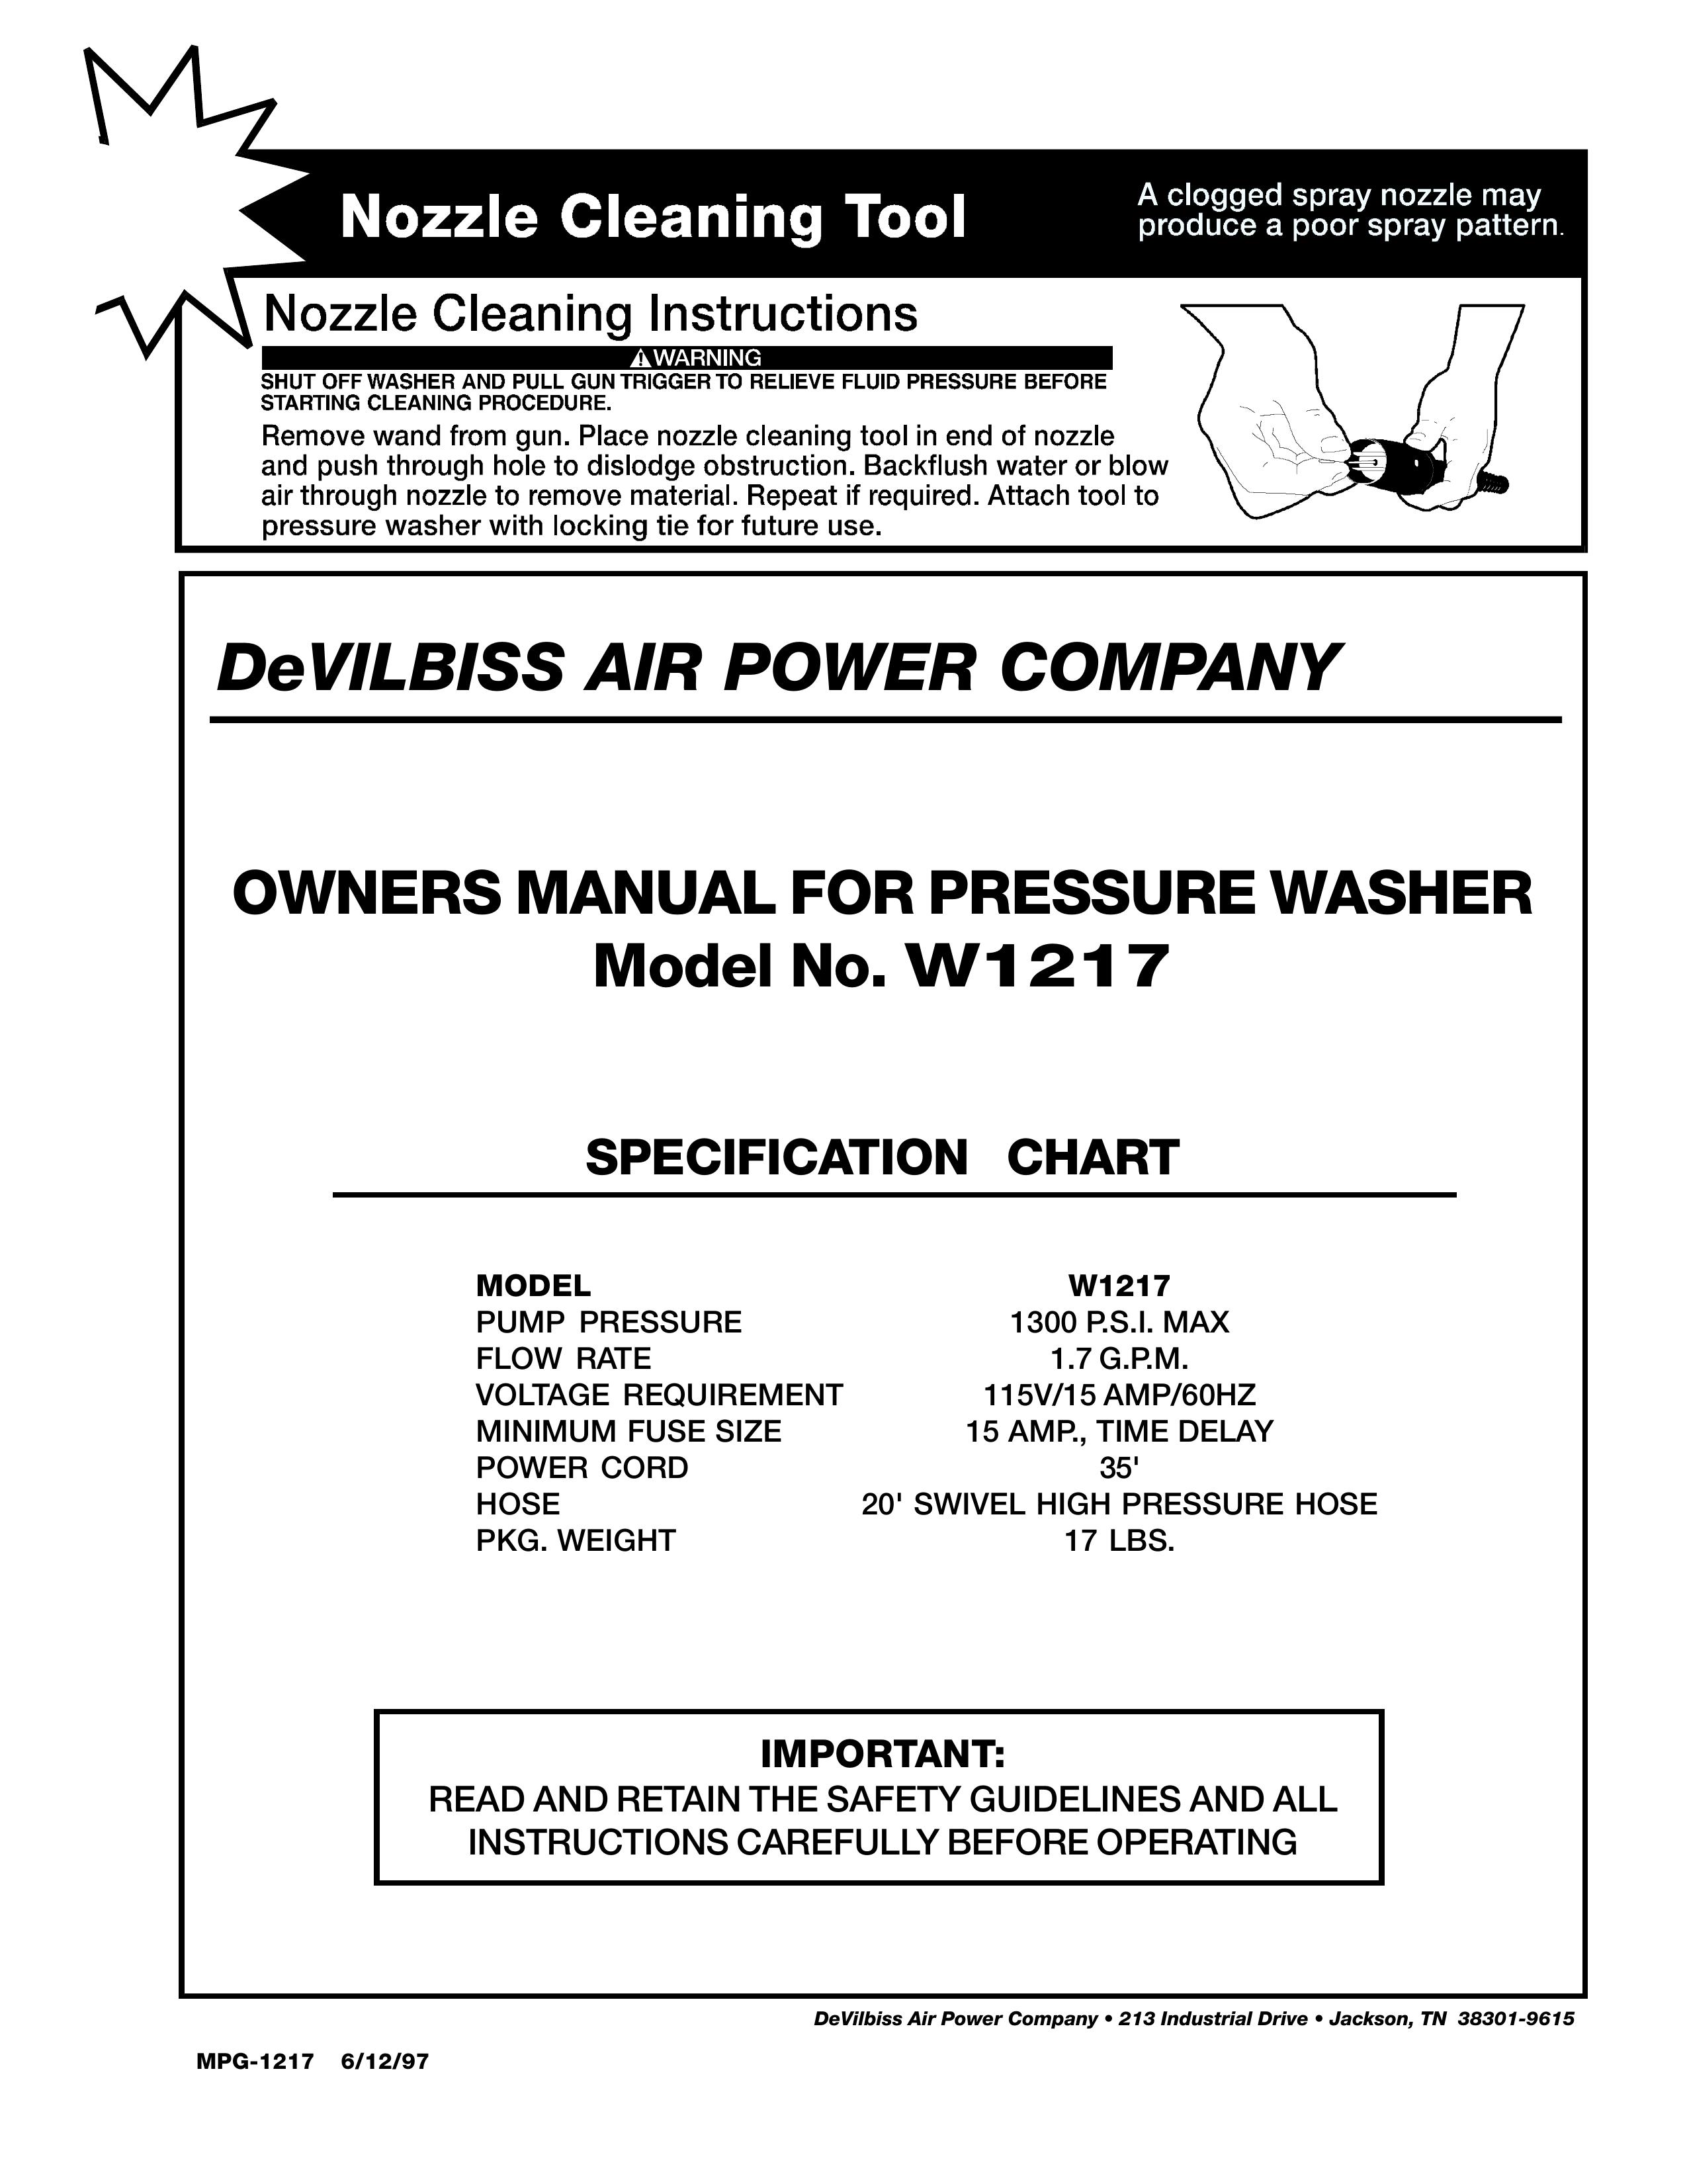 DeVillbiss Air Power Company MPG-1217 Pressure Washer User Manual